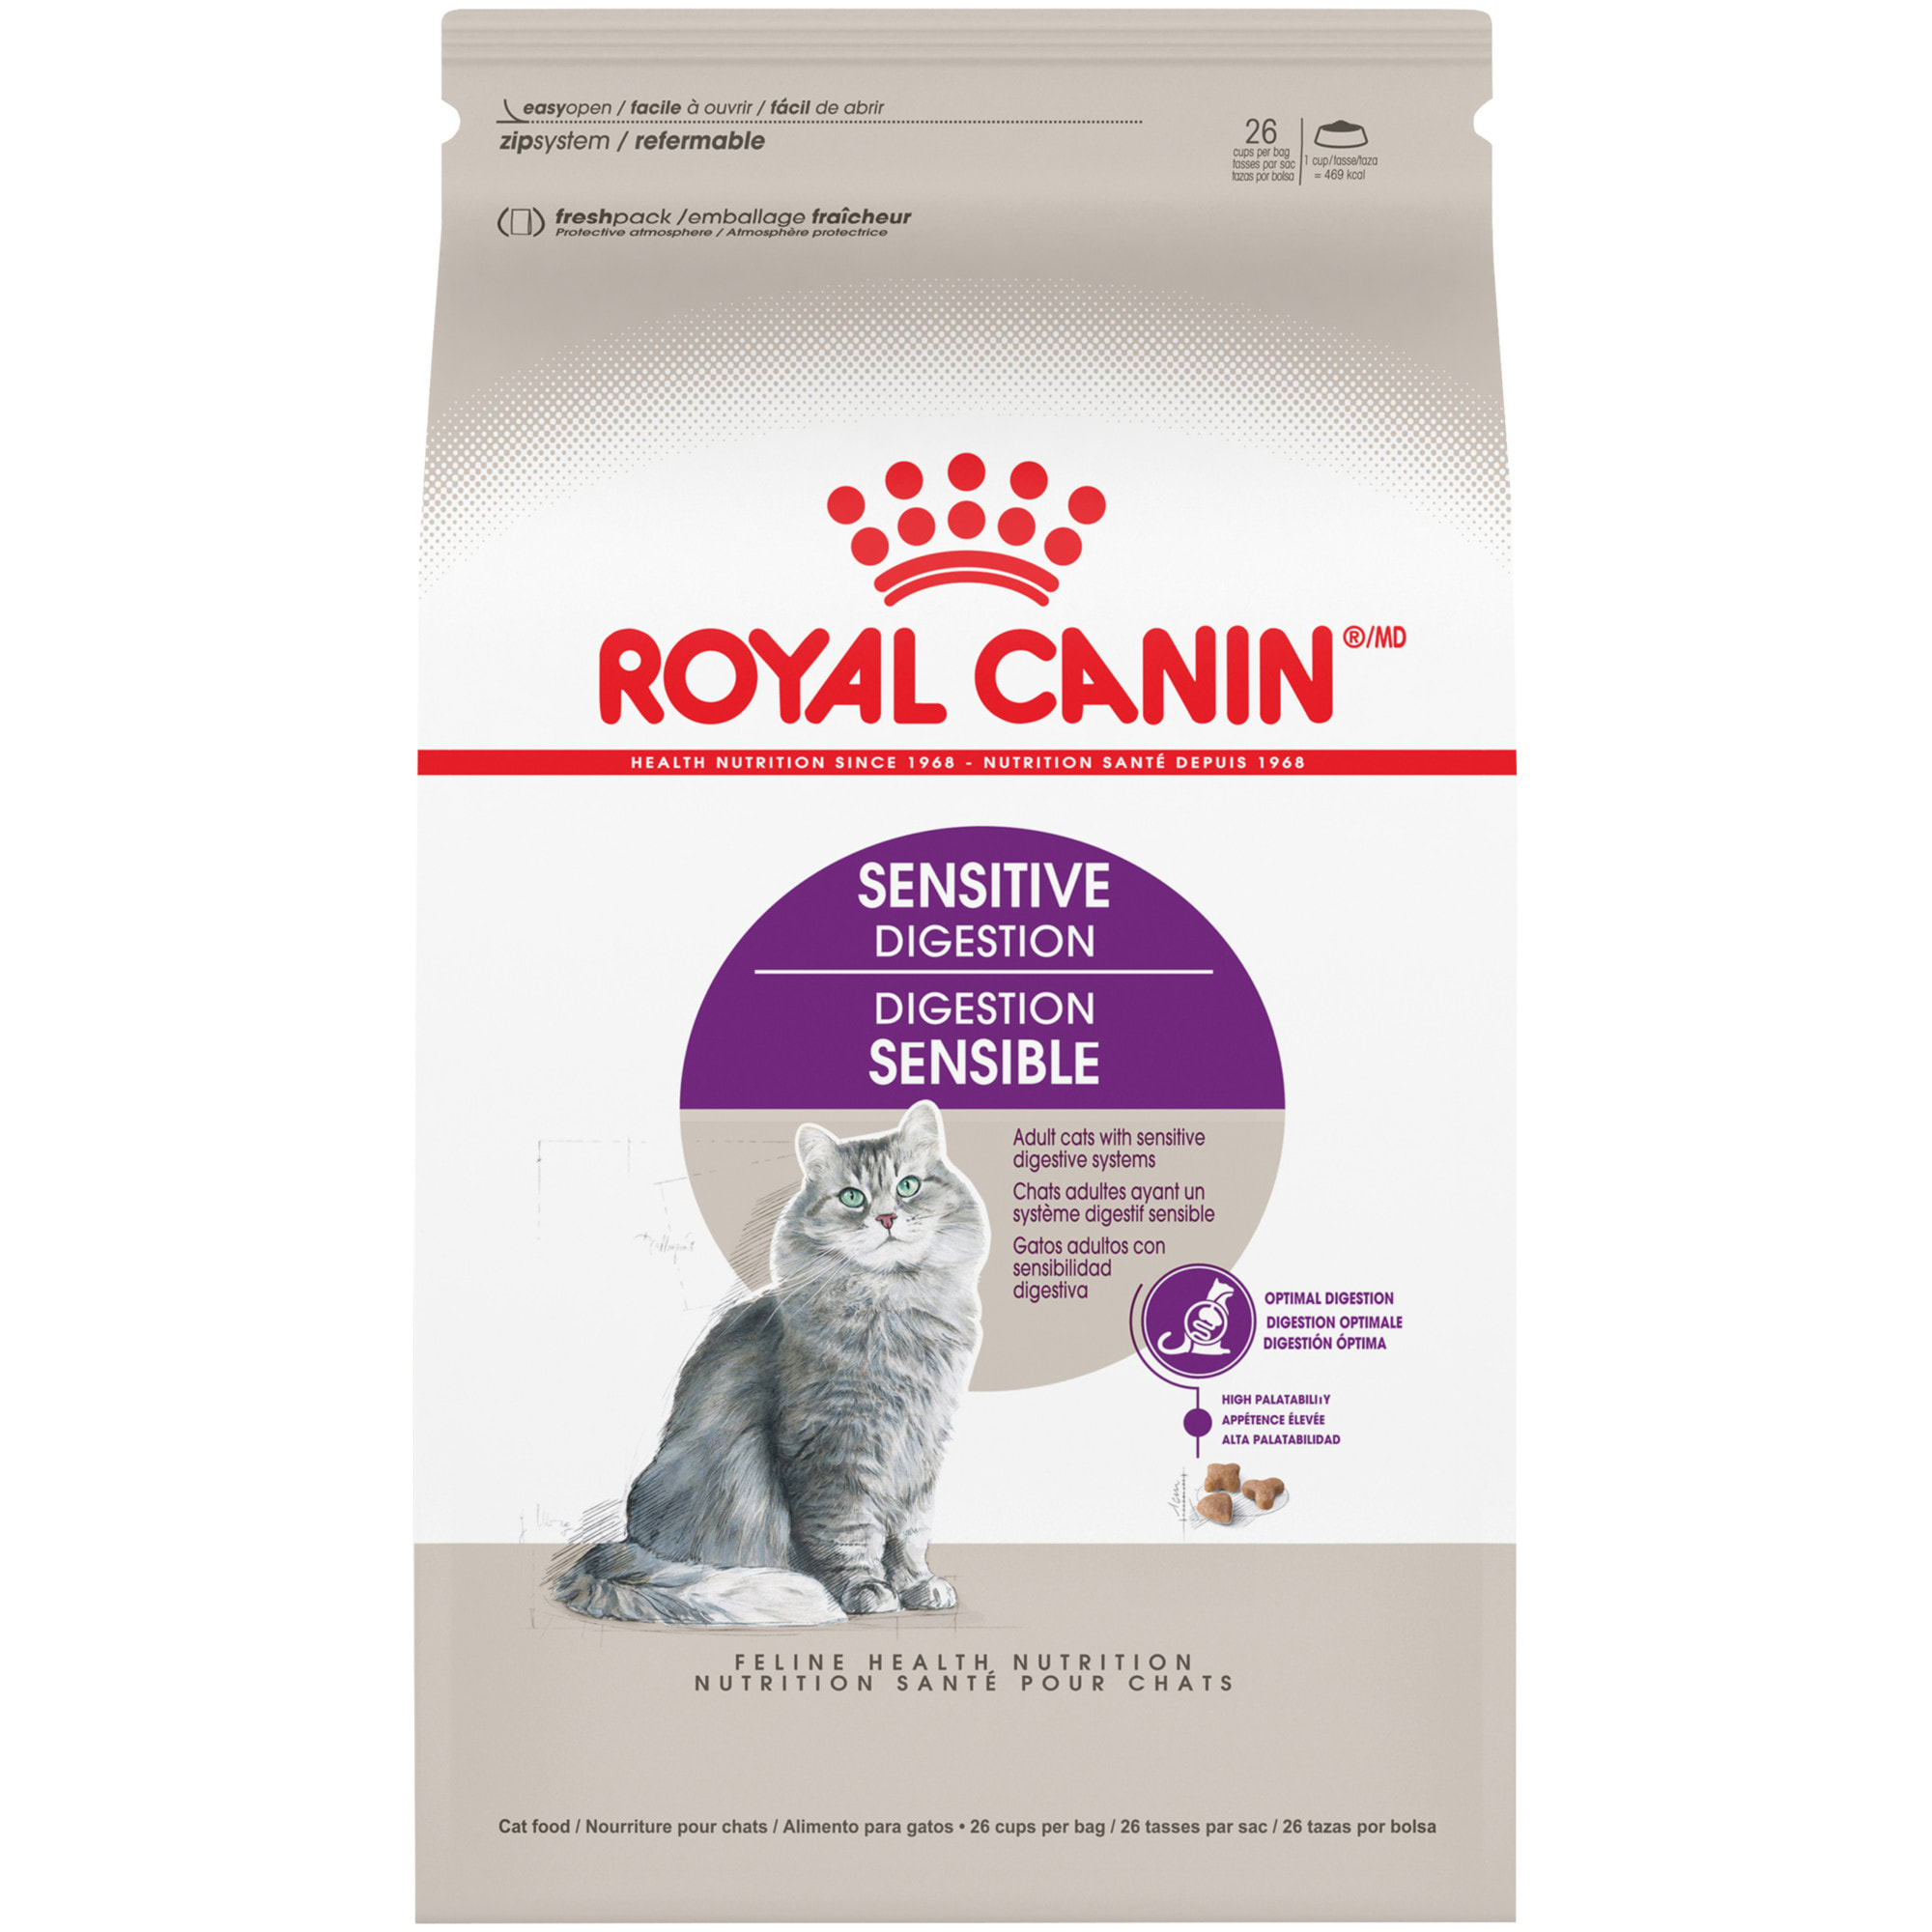 Royal Canin Sensitive Digestion Adult Dry Cat Food, 7 lbs. Pet Food